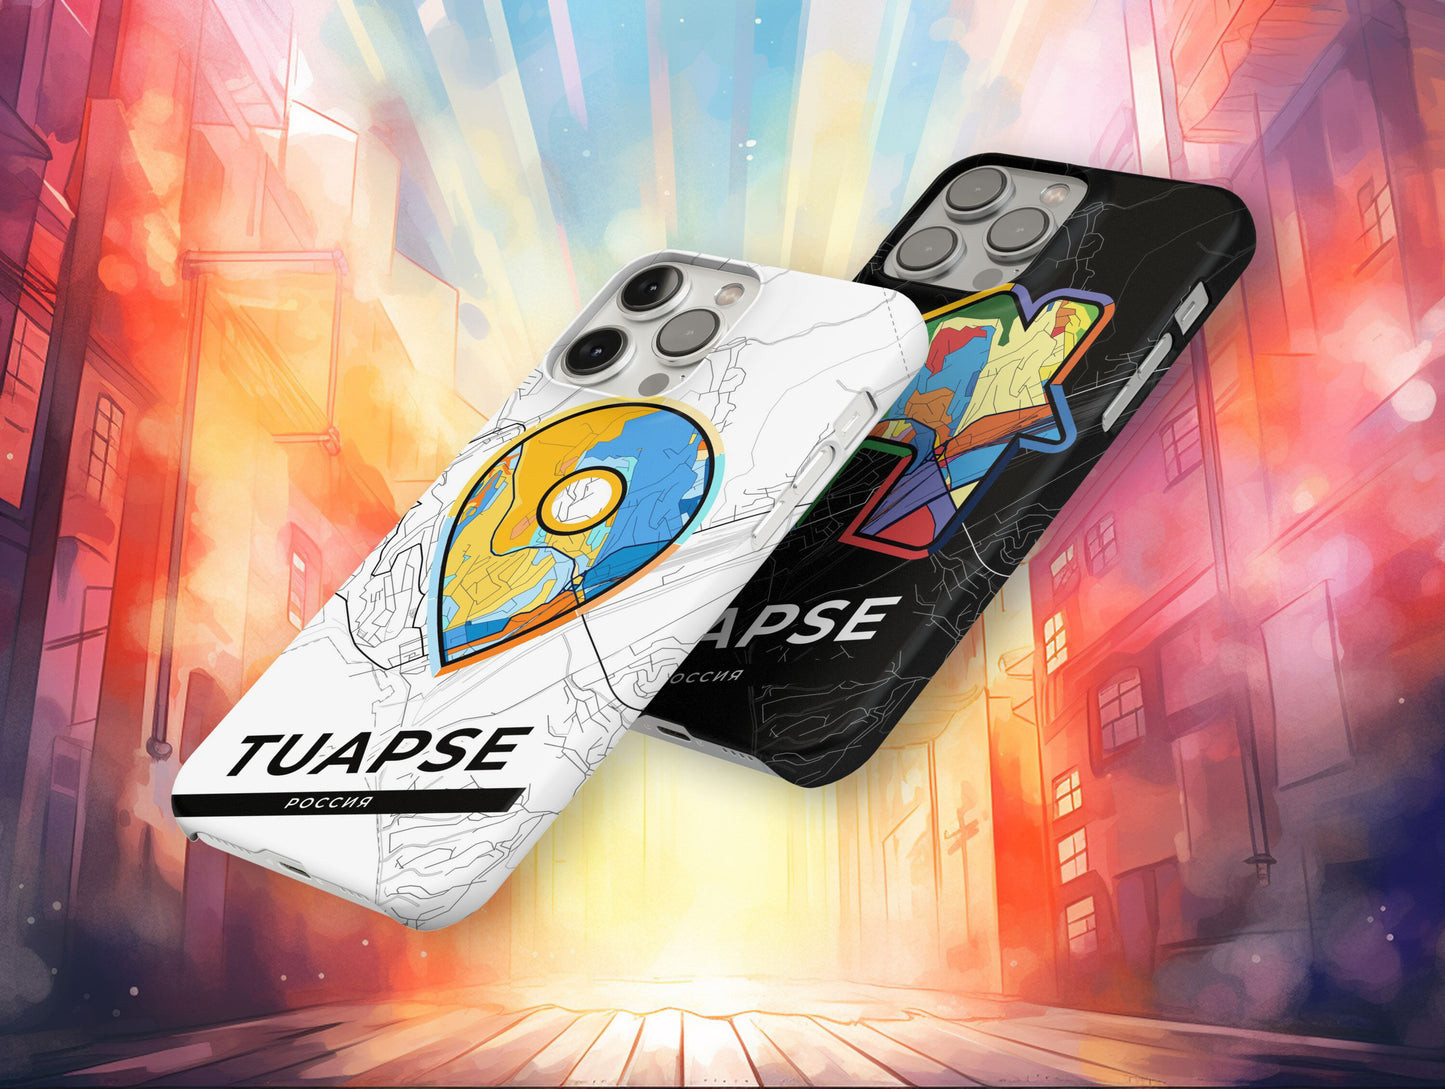 Tuapse Russia slim phone case with colorful icon